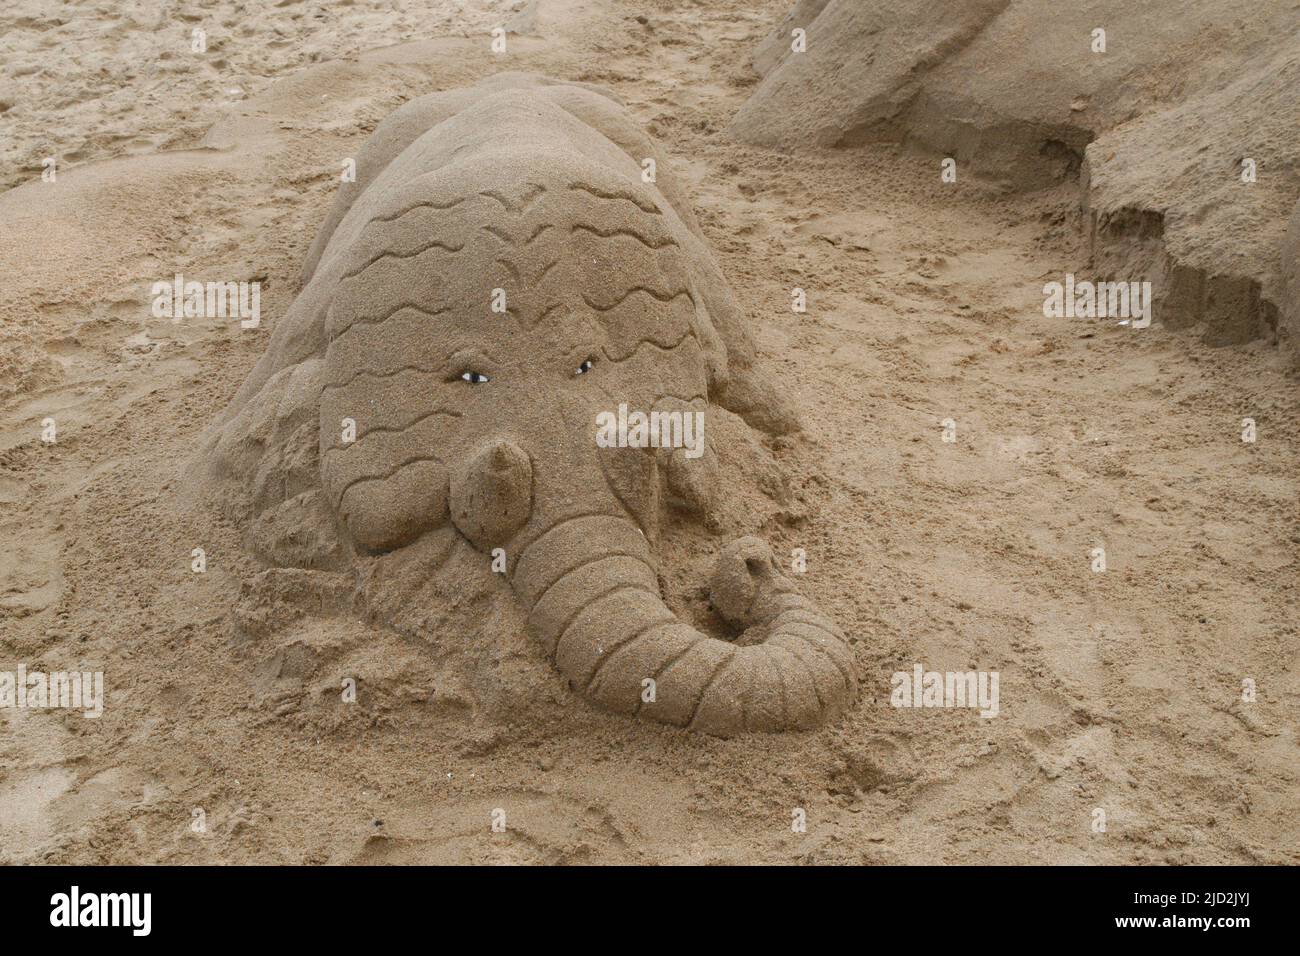 Sand sculpture of elephant head on beach sand, Umfolozi Beach, KwaZulu Natal, South Africa. Stock Photo